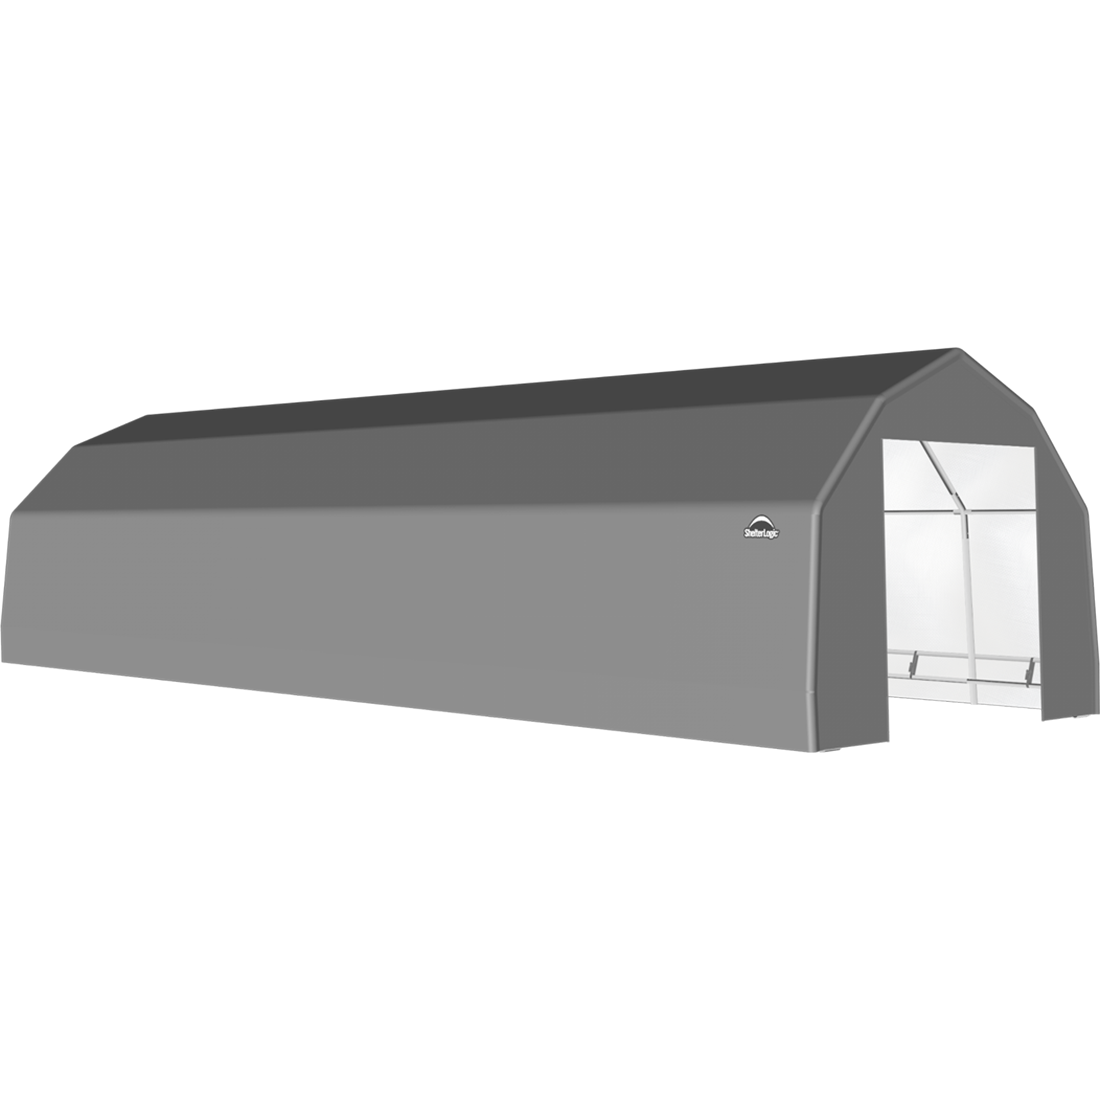 ShelterTech SP Series Barn Shelter, 15 ft. x 48 ft. x 11 ft. Heavy Duty PVC 14.5 oz. Gray